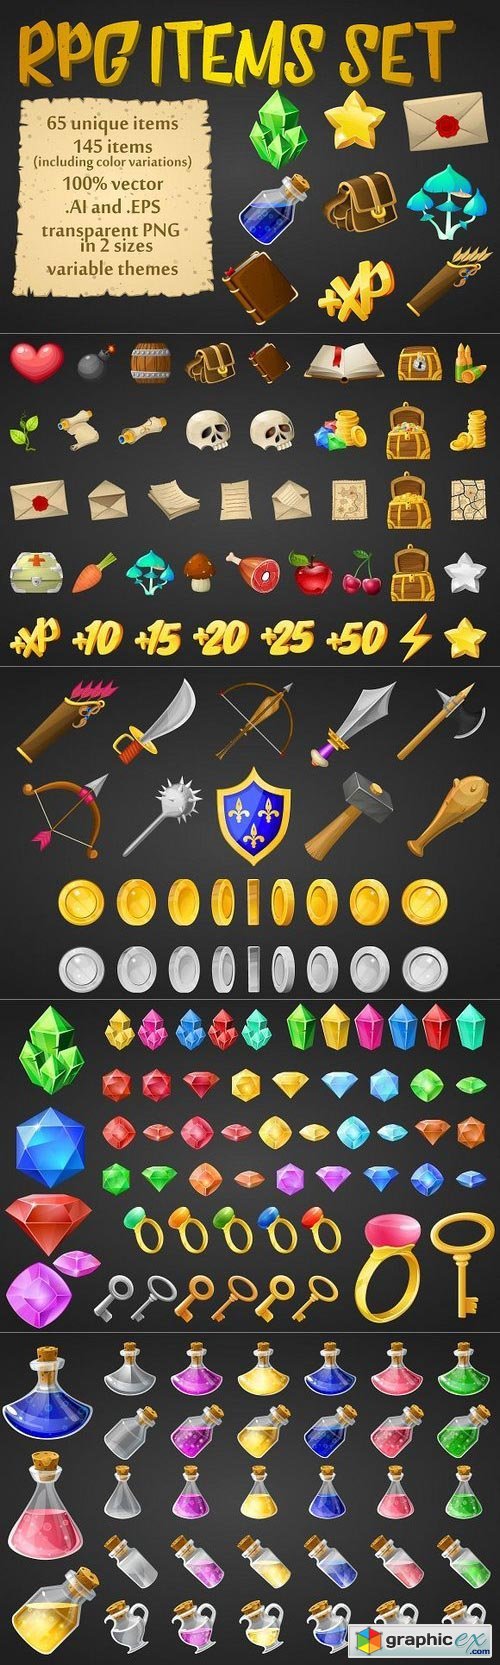 RPG game items set